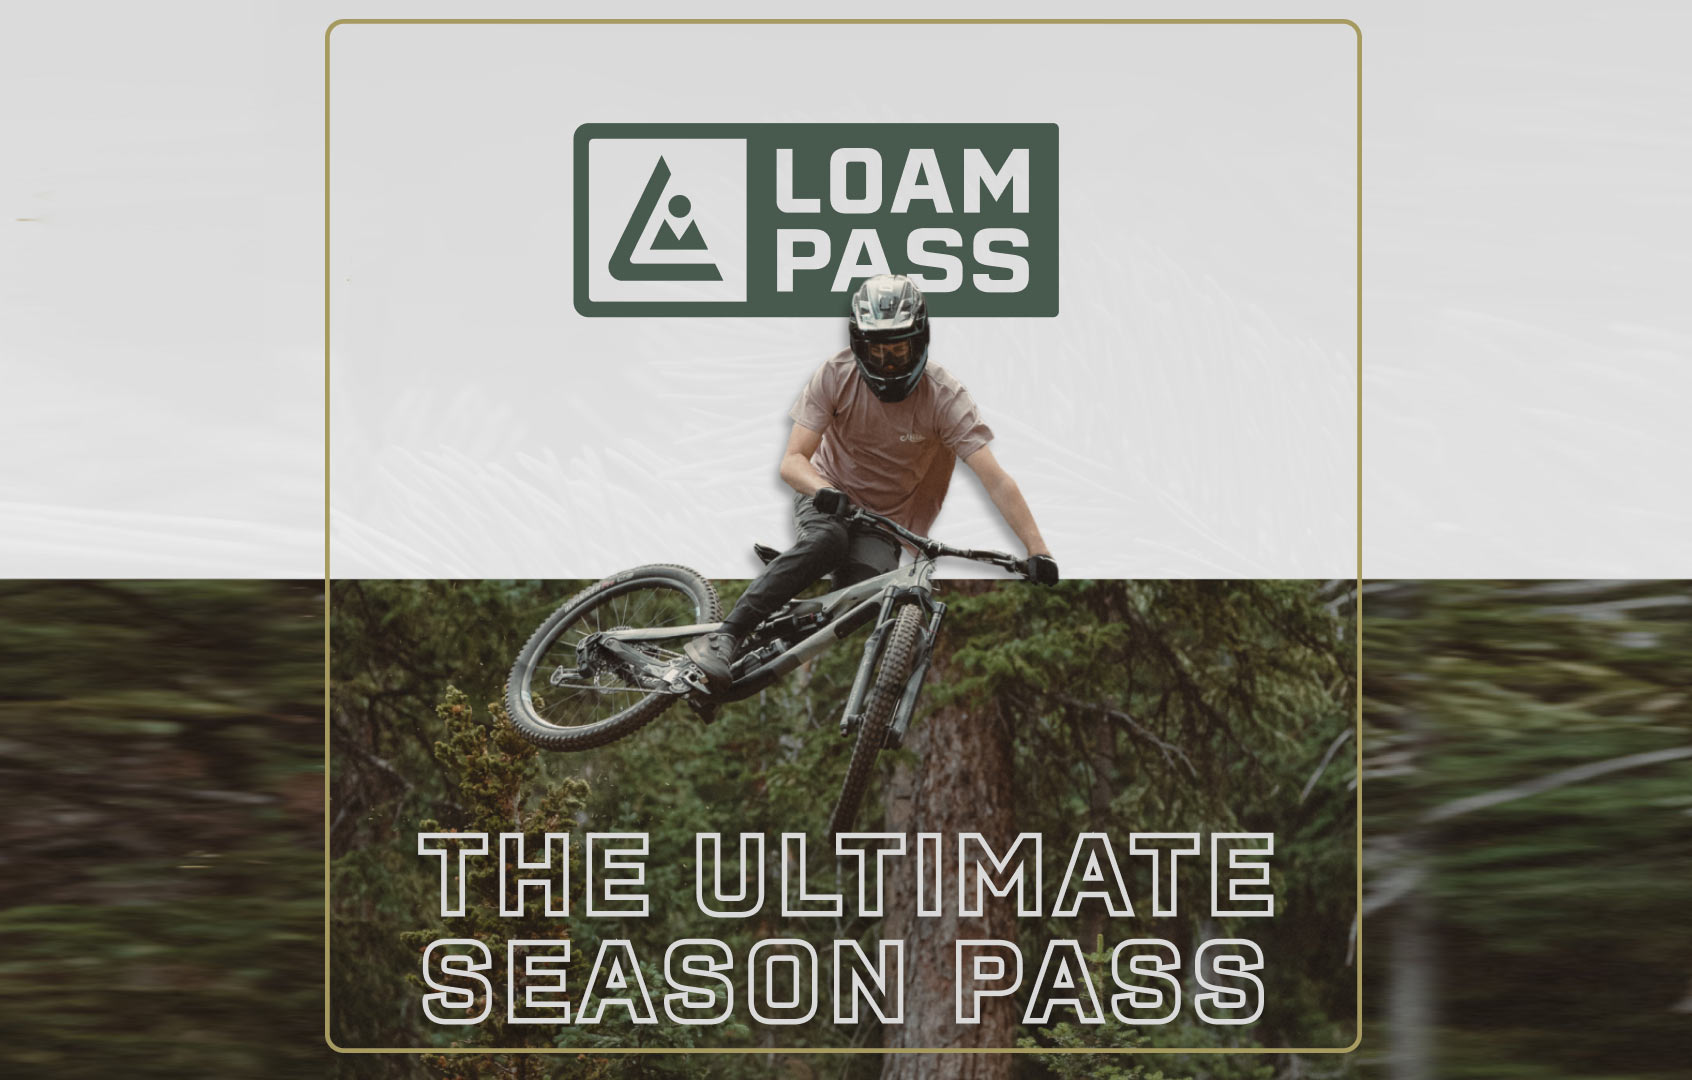 Loam Pass multi bike park season ticket promo banner